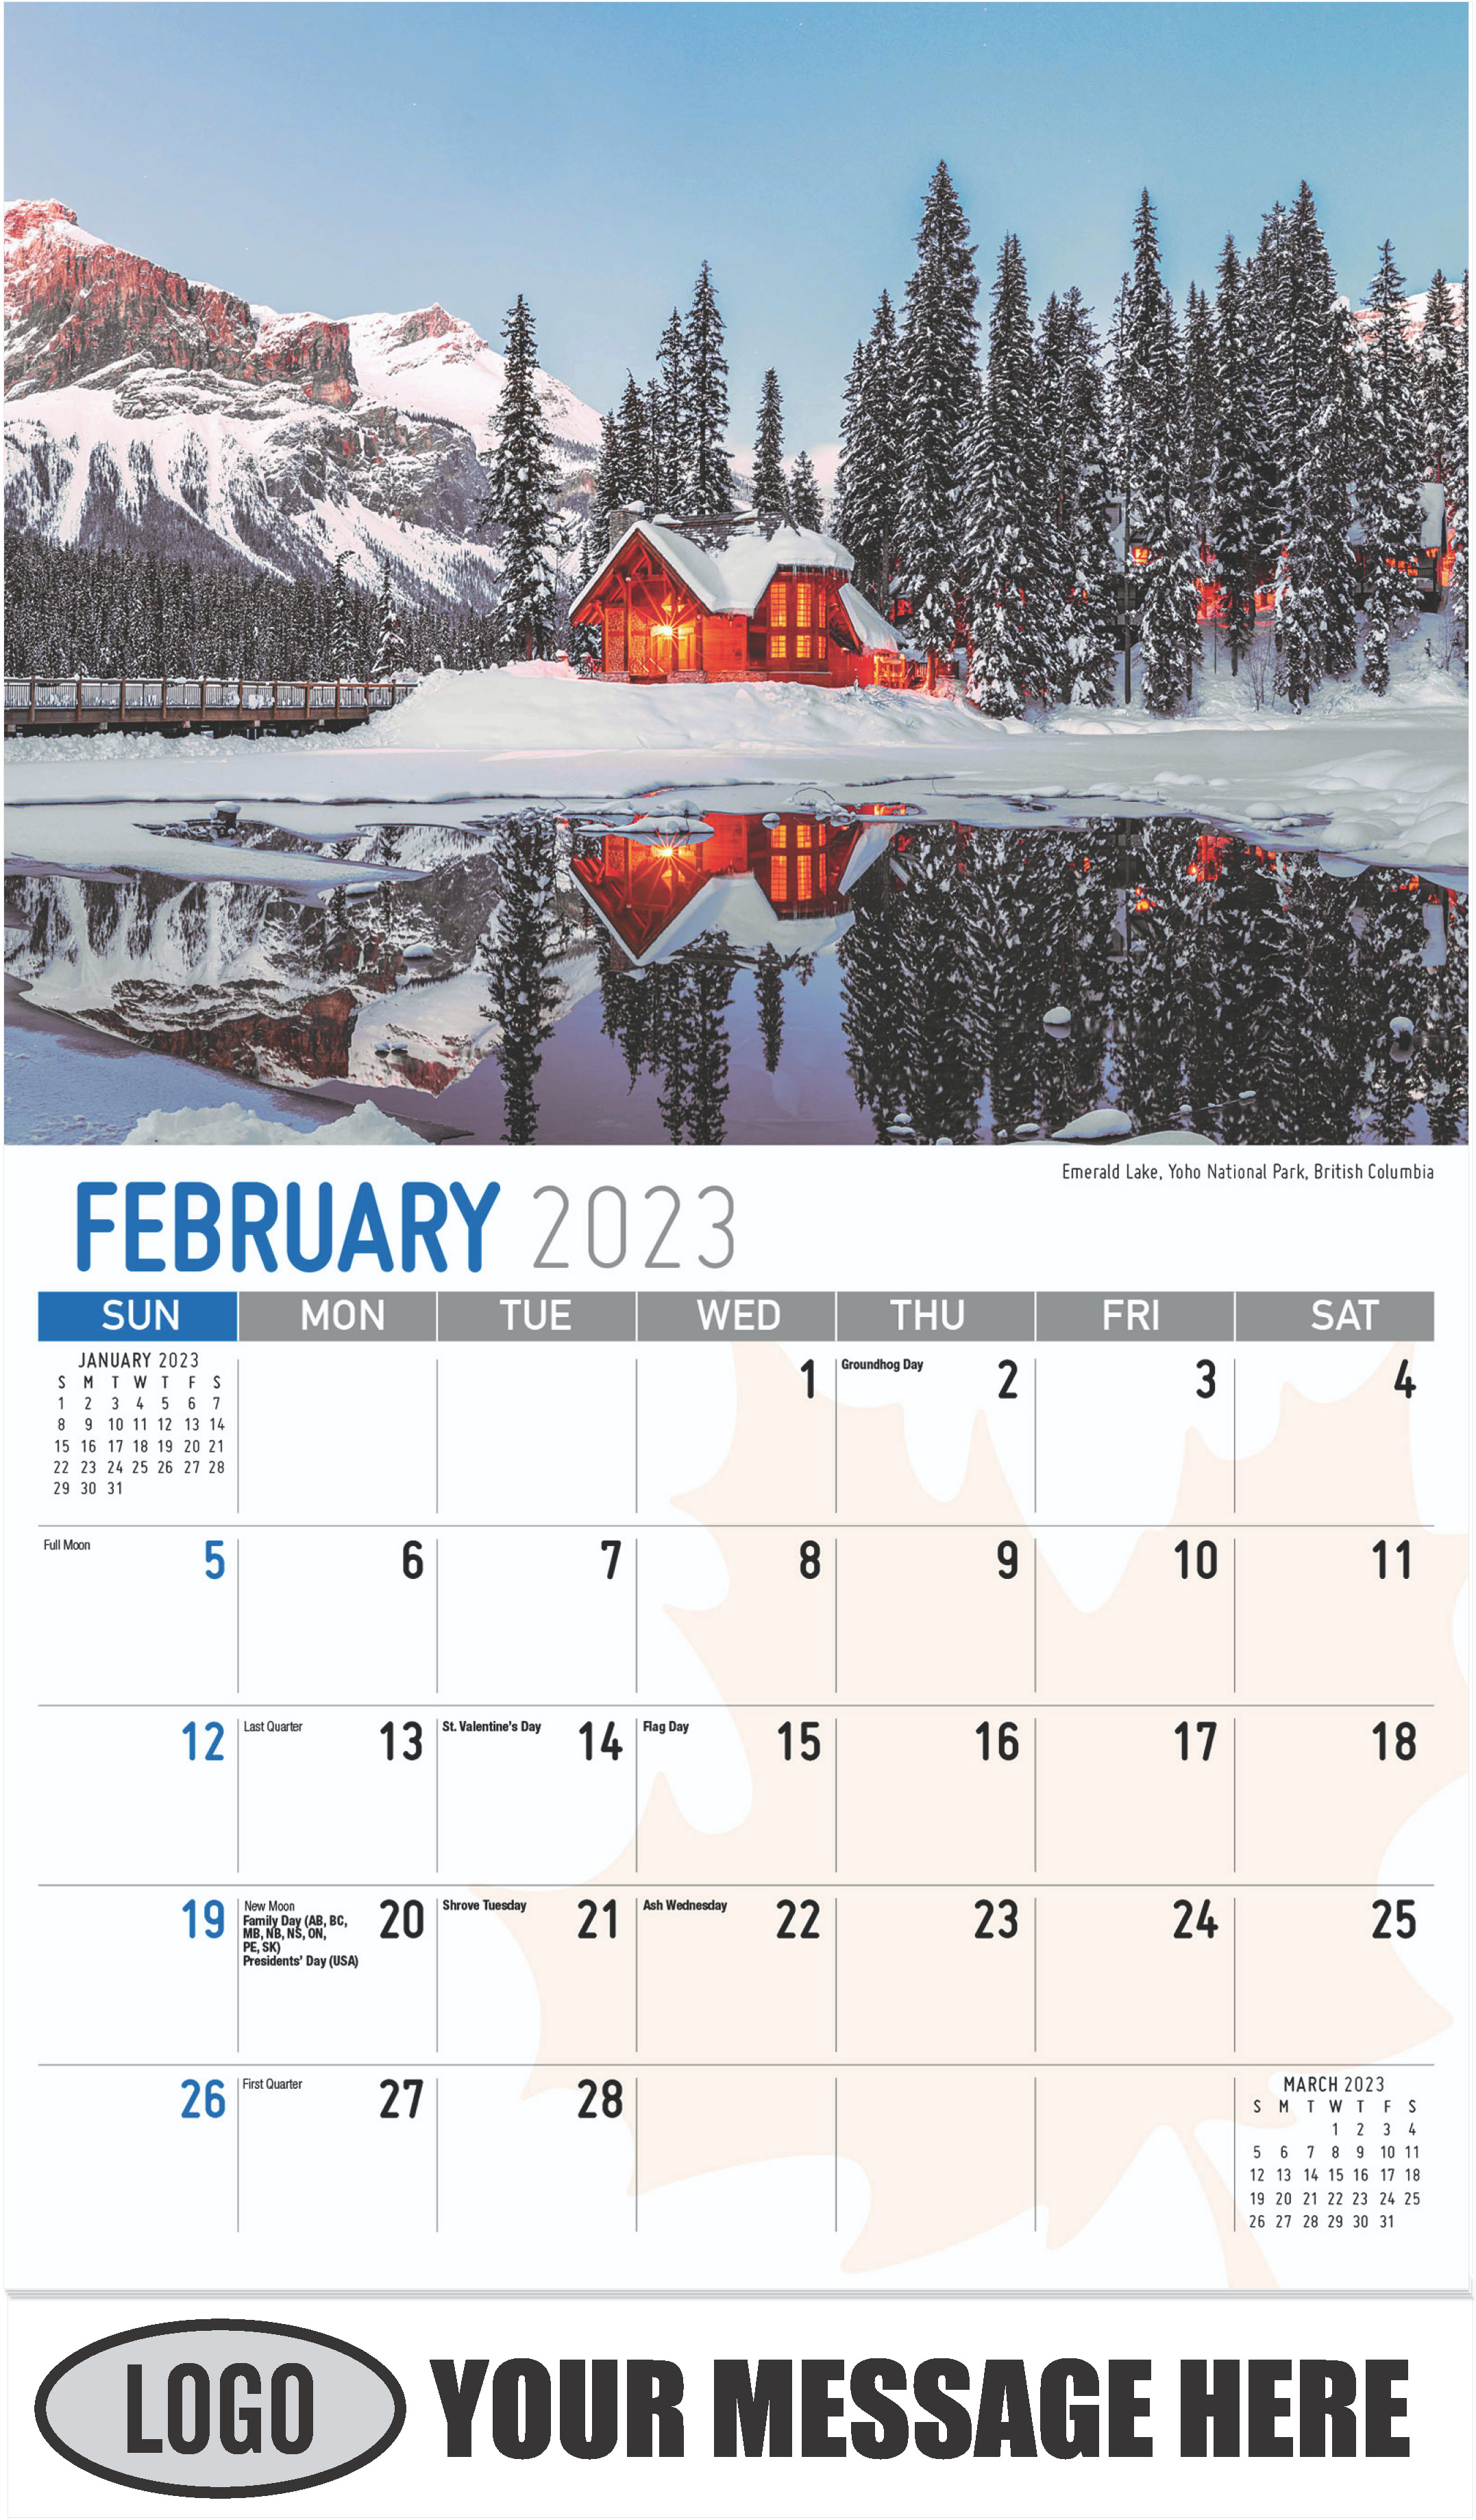 Emerald Lake, Yoho National Park, British Columbia - February - Scenes of Canada 2023 Promotional Calendar